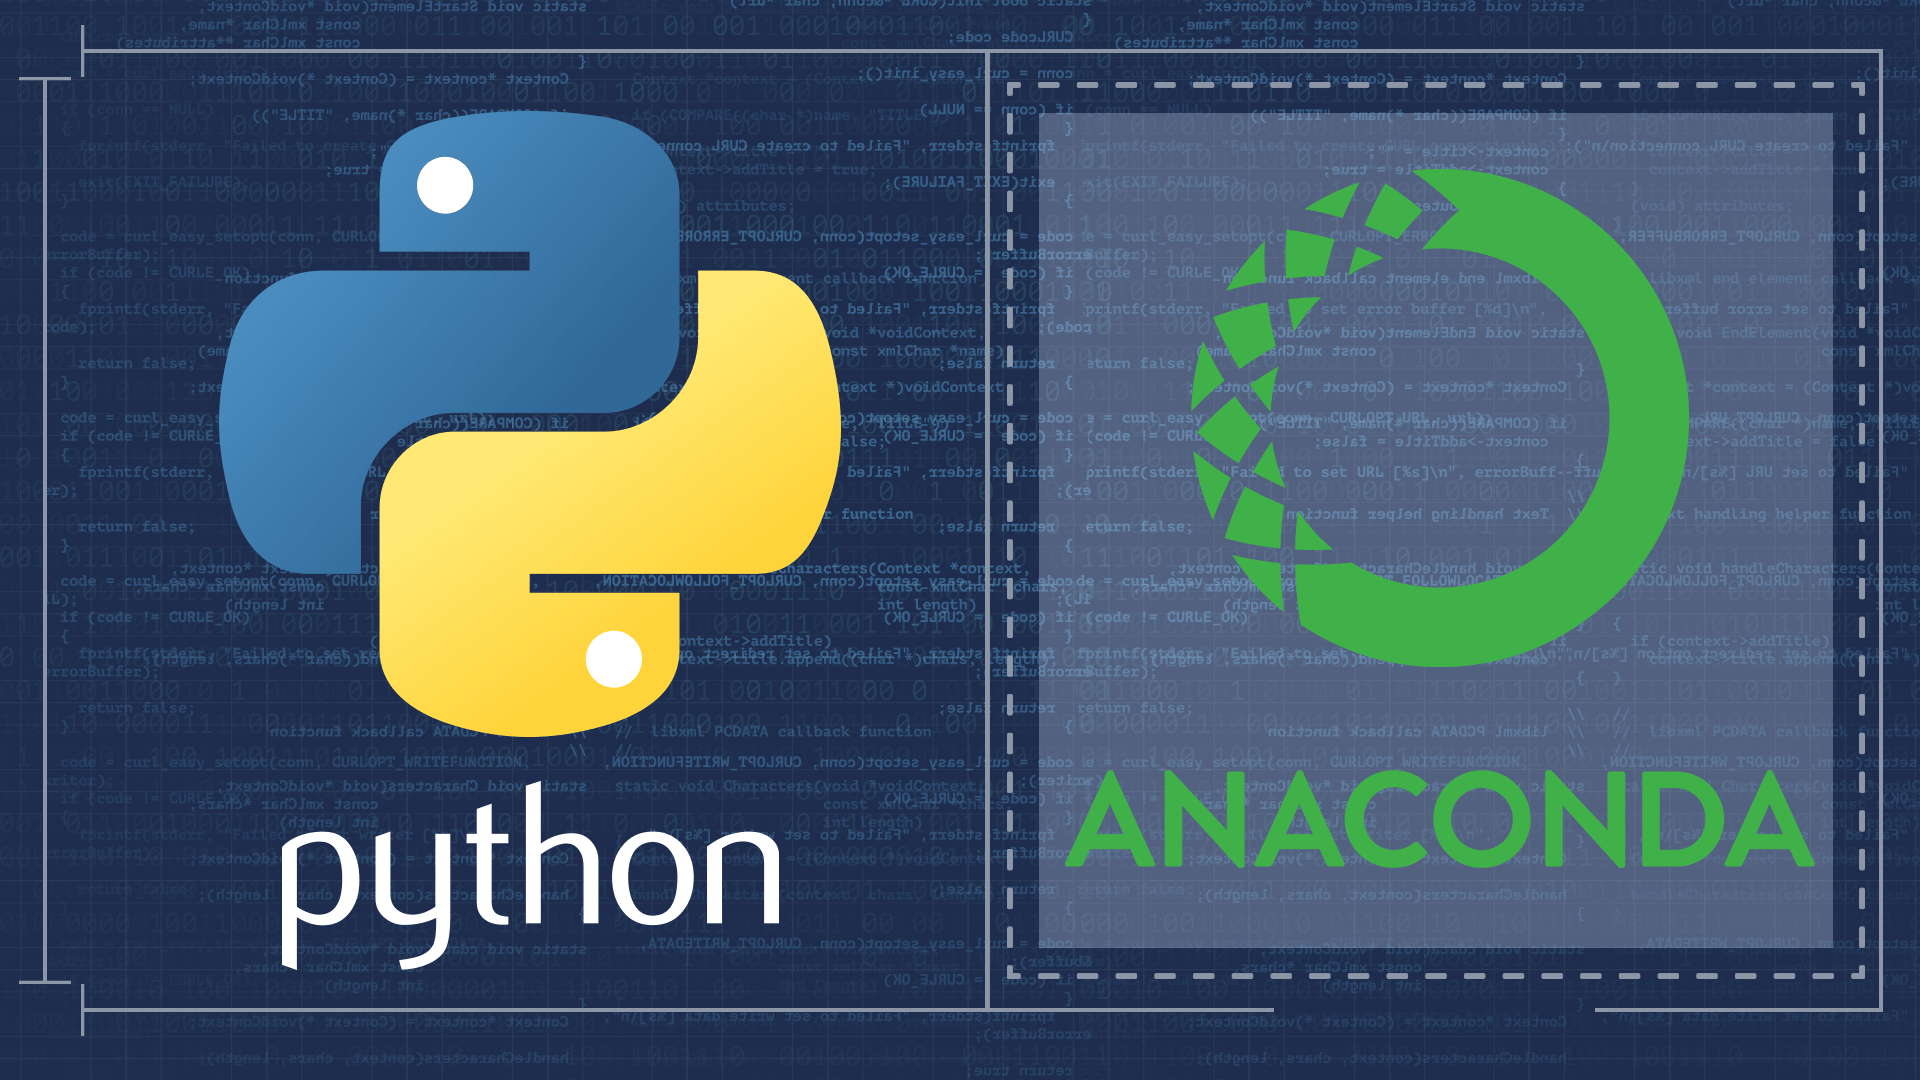 anaconda python software free download